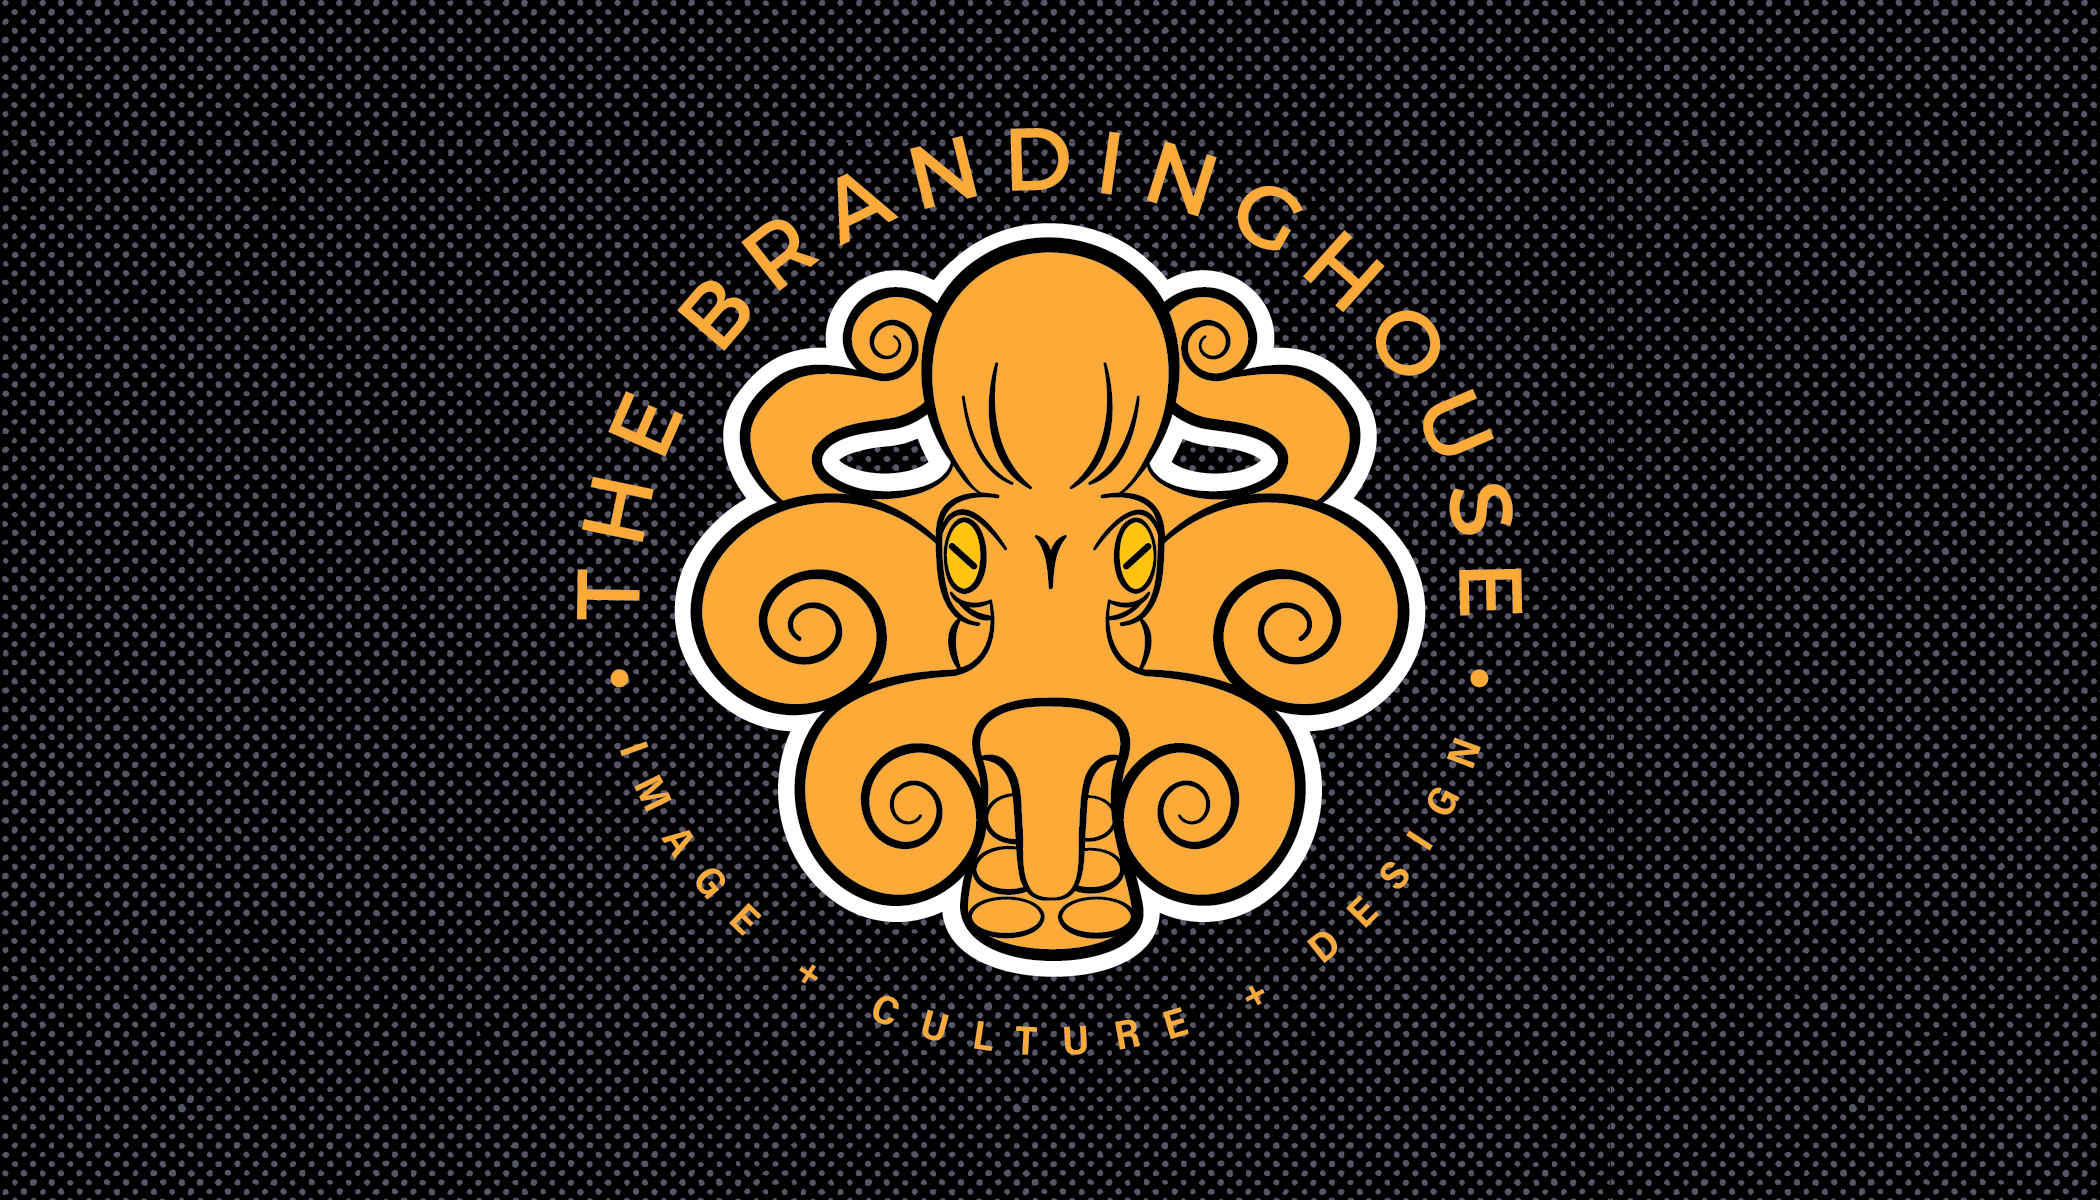 The Brandinghouse Image + Culture + Design